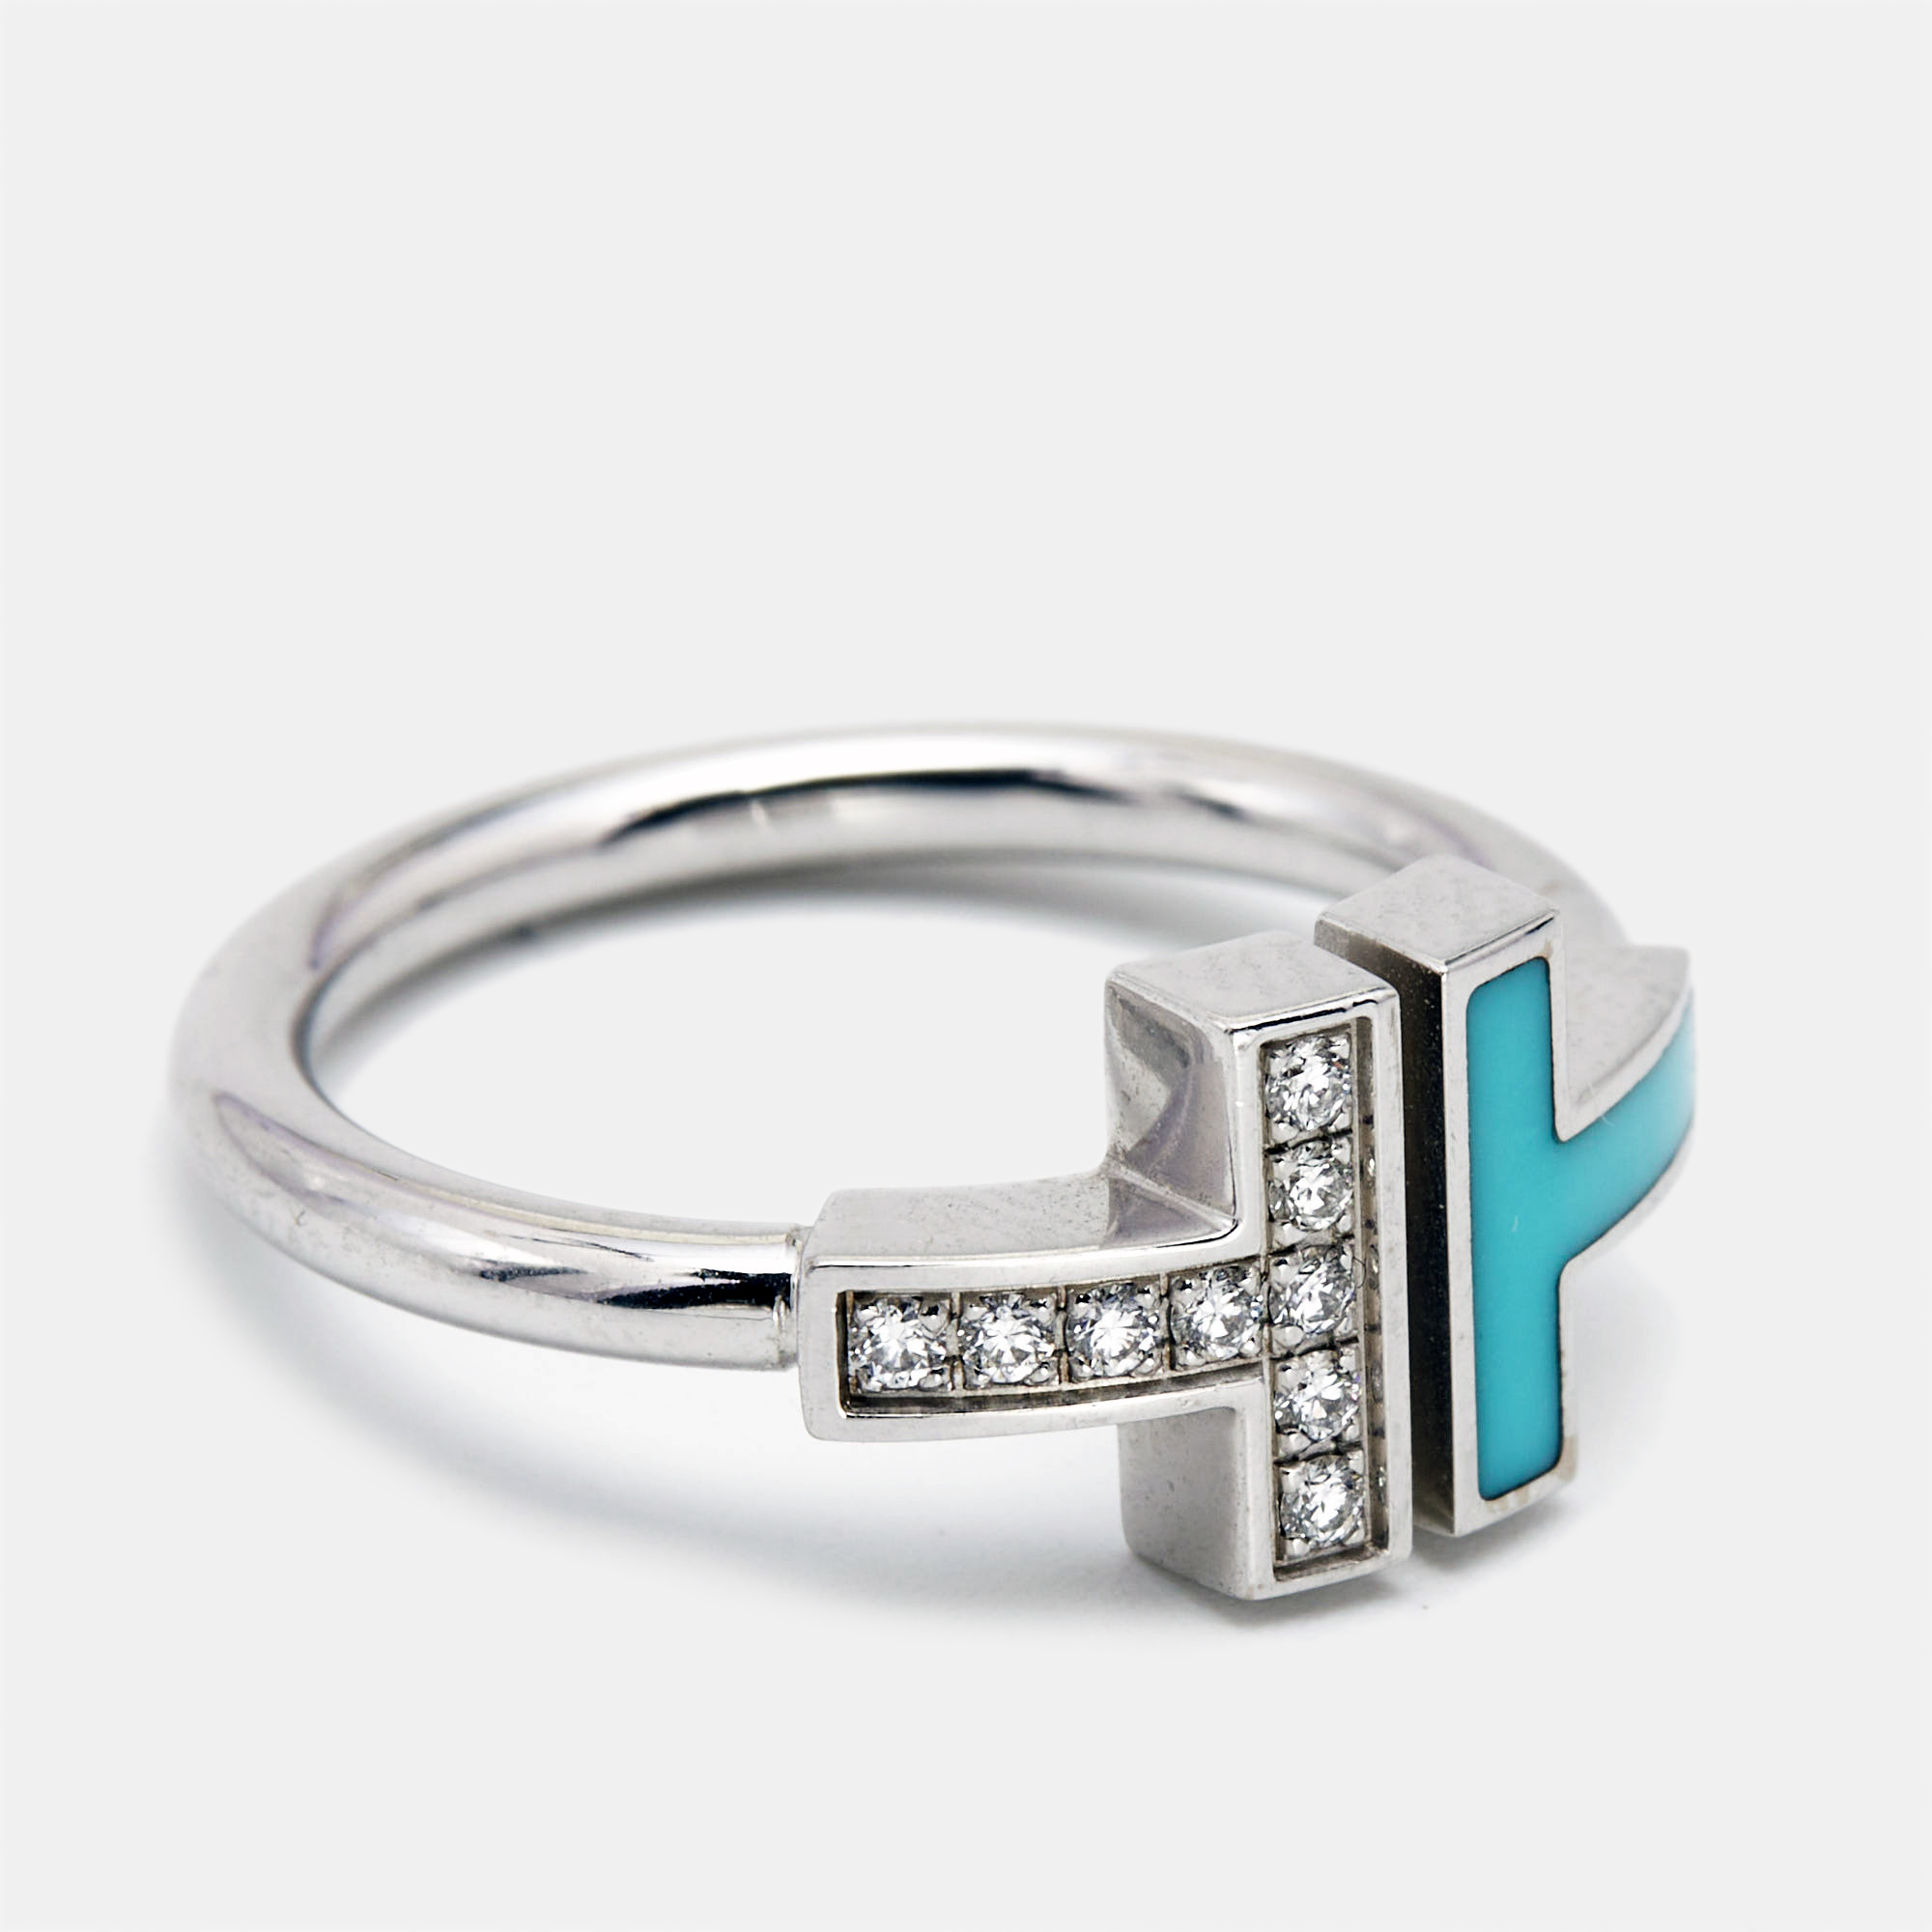 Tiffany & Co. Twire Turquoise Diamonds 18k White Gold Ring Size 52